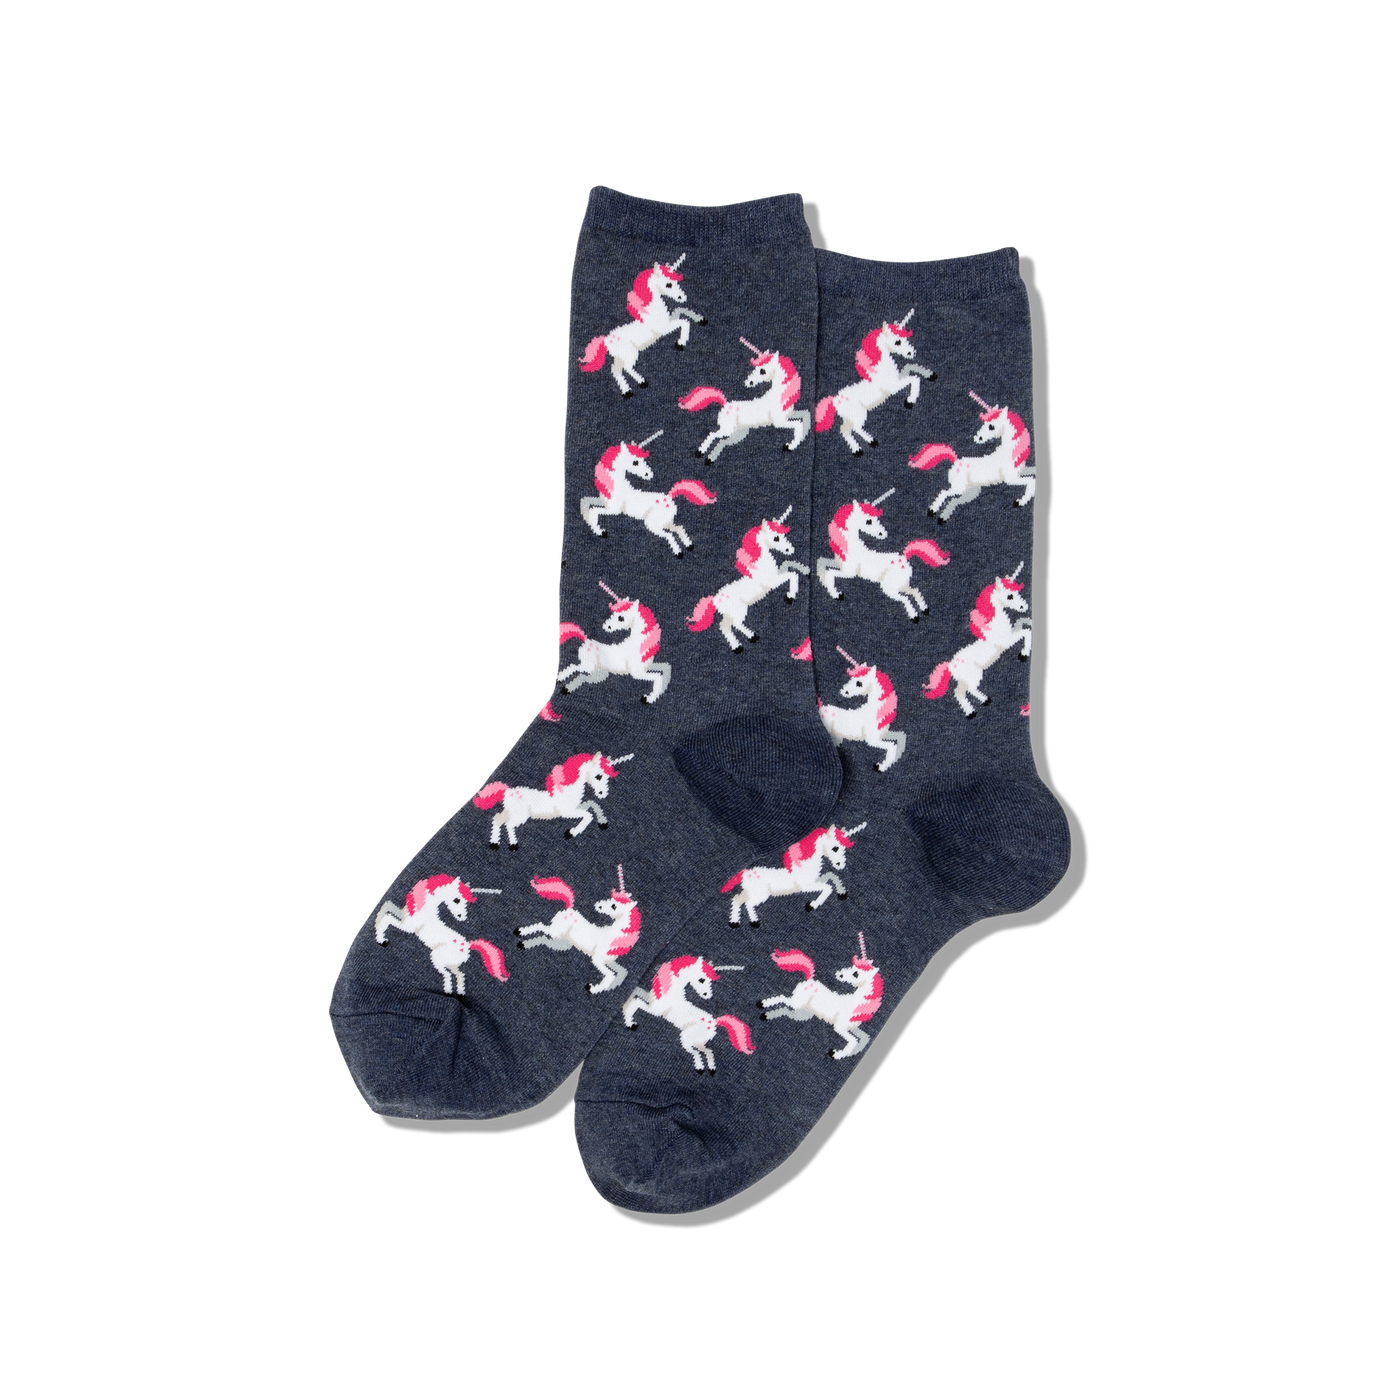 "Unicorn" Cotton Dress Crew Socks by Hot Sox - Medium